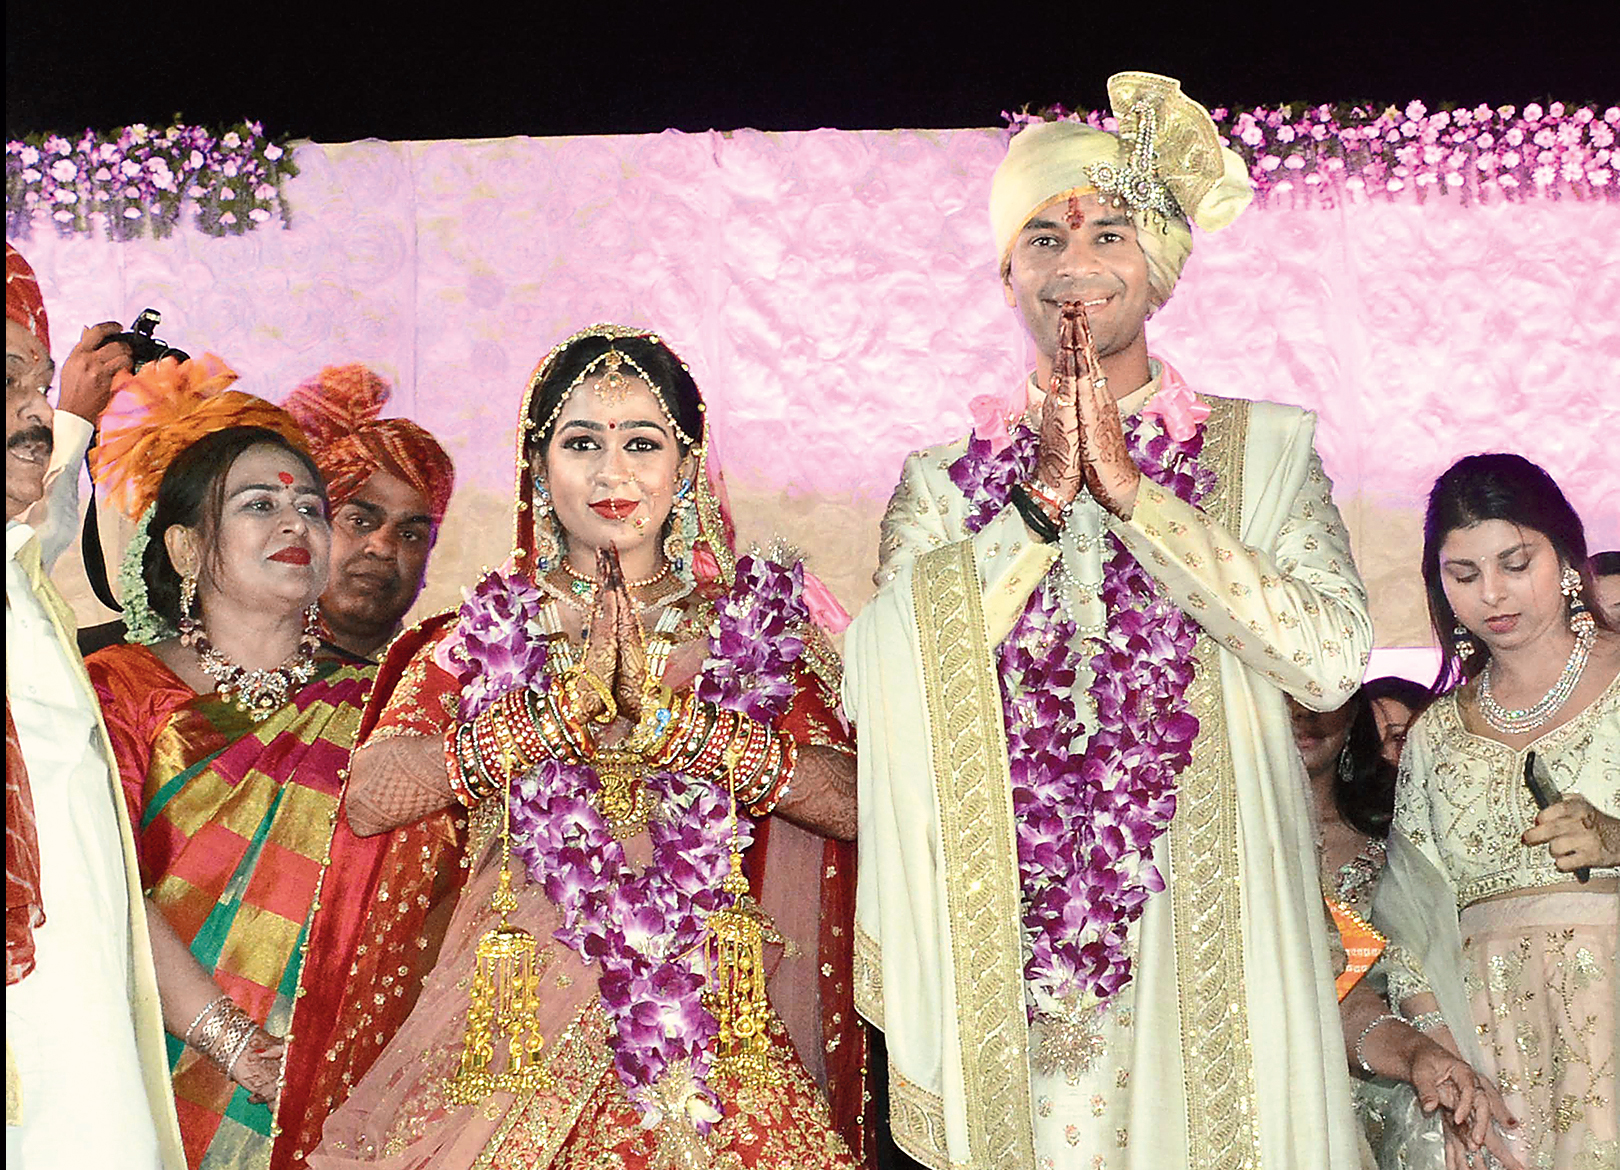 Tej Pratap and Aishwarya Rai at their wedding earlier this year